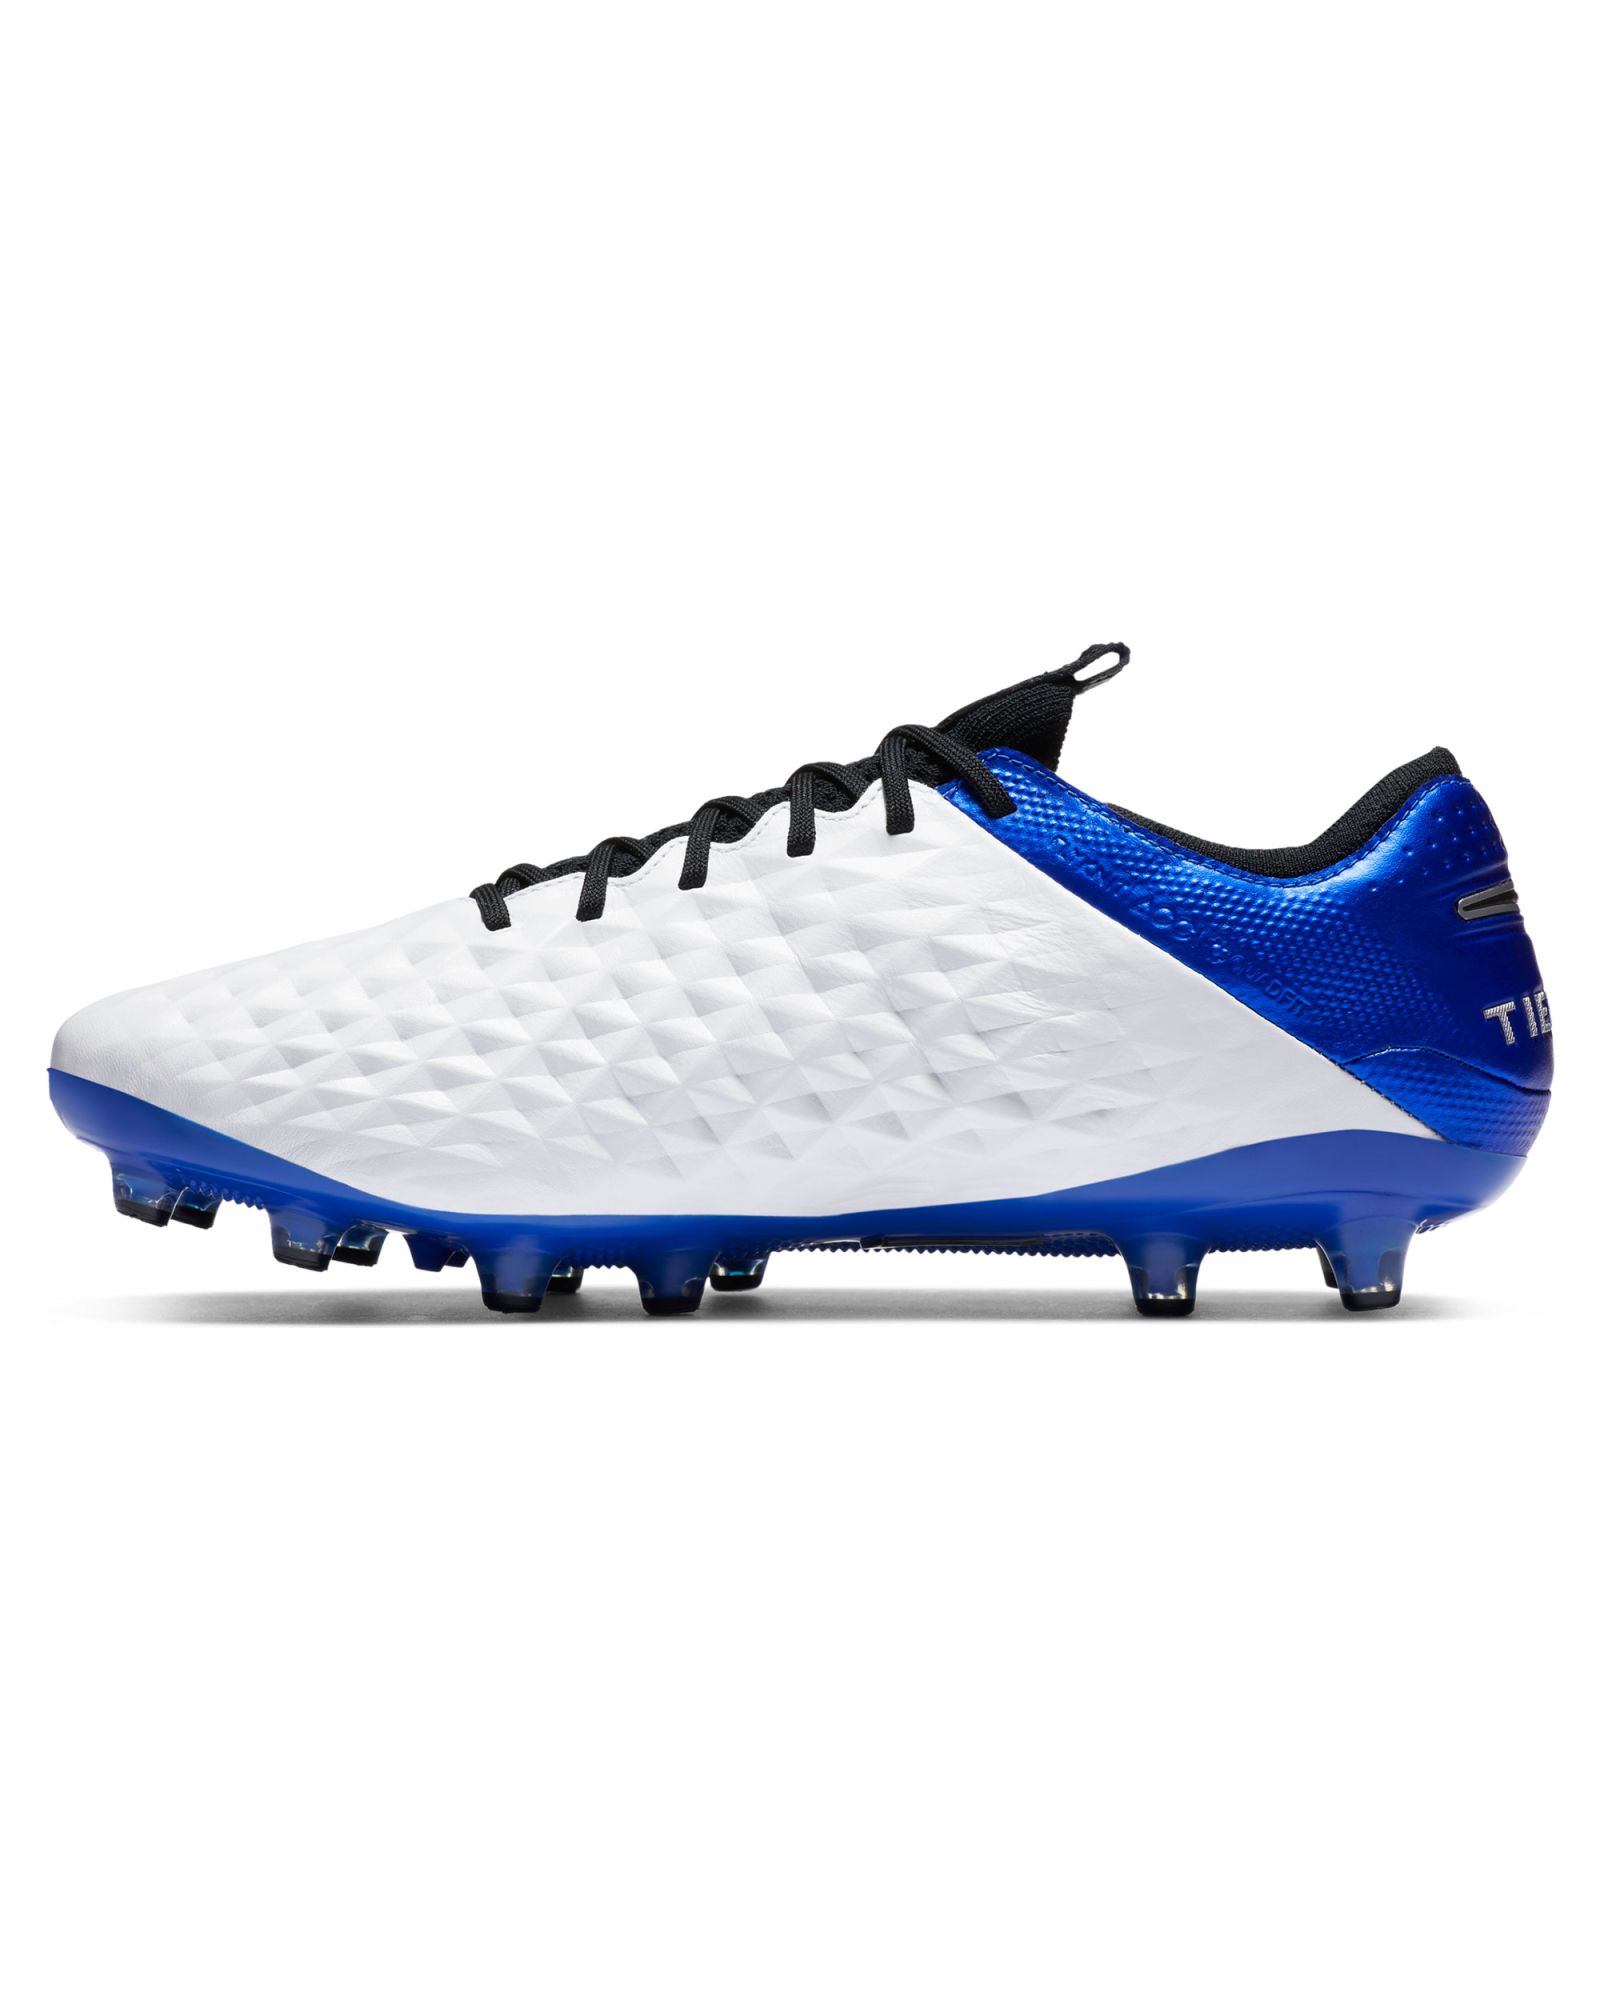 Botas de Fútbol Nike Tiempo Legend 8 Elite AG-Pro Azul Blanco - Fútbol Factory